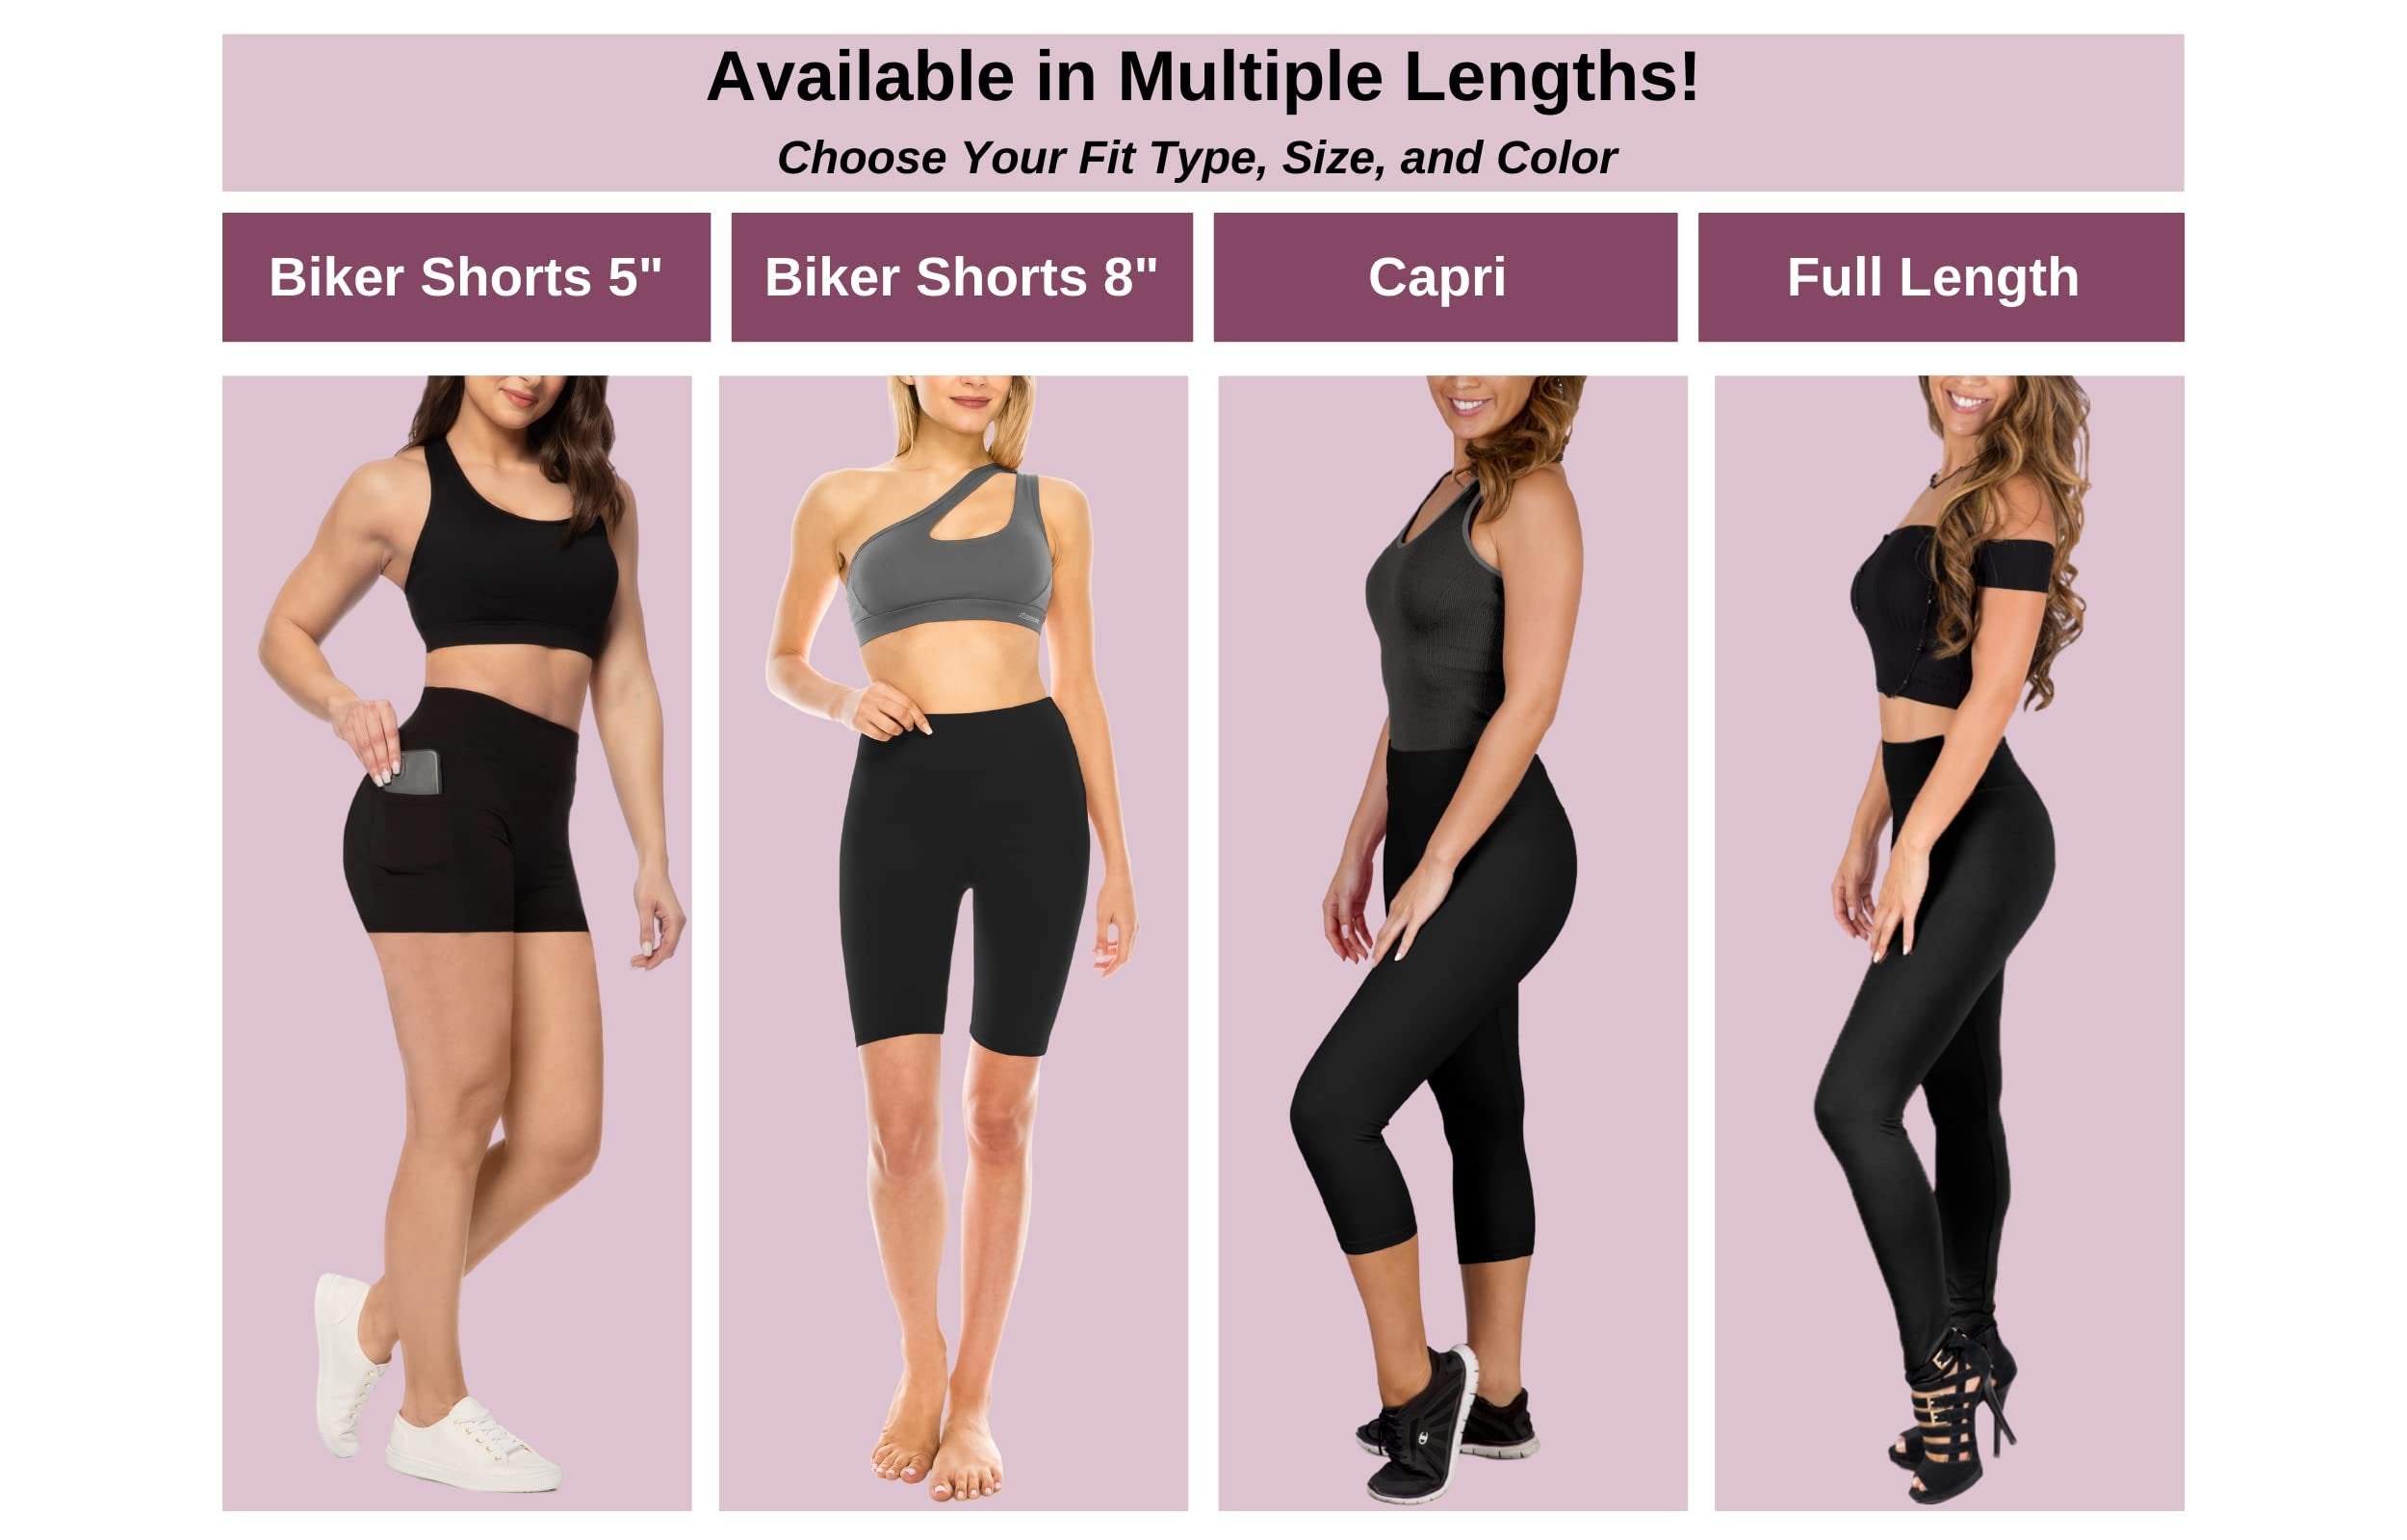 SATINA High Waisted Capri Leggings for Women - Capri Leggings for Women - High Waist for Tummy Control - Royal Blue Capri Leggings for |3 Inch Waistband (One Size, Royal Blue)